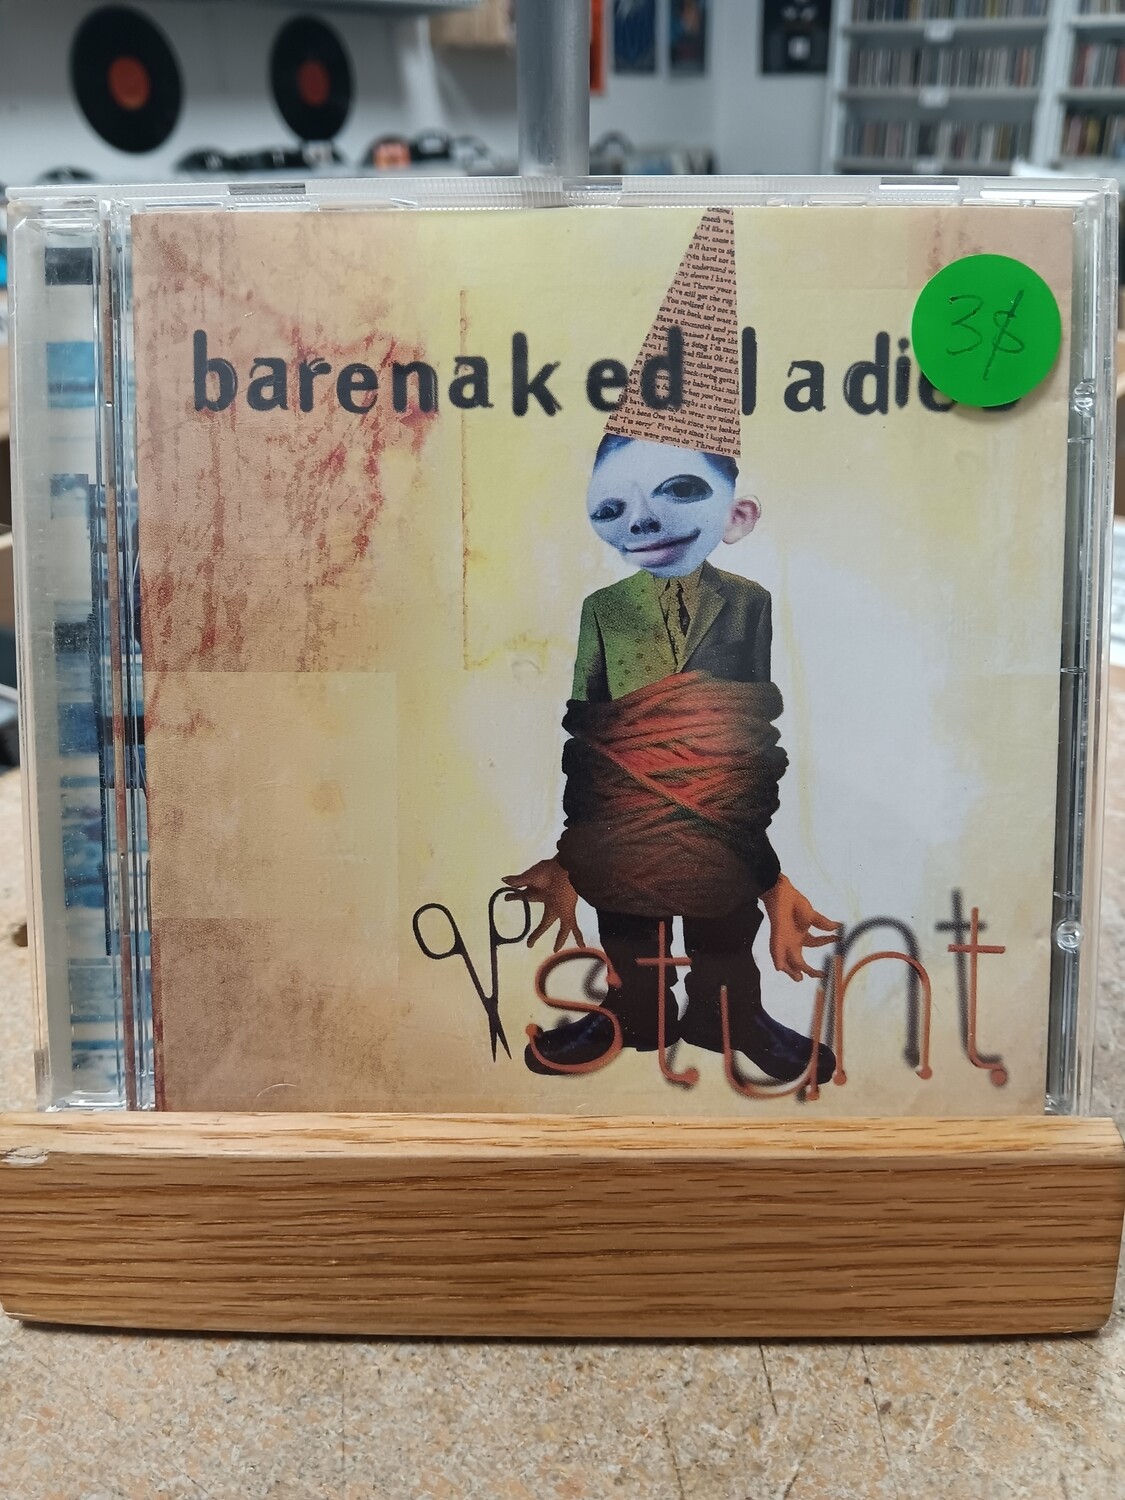 Barenaked Ladies - Stunt (CD)